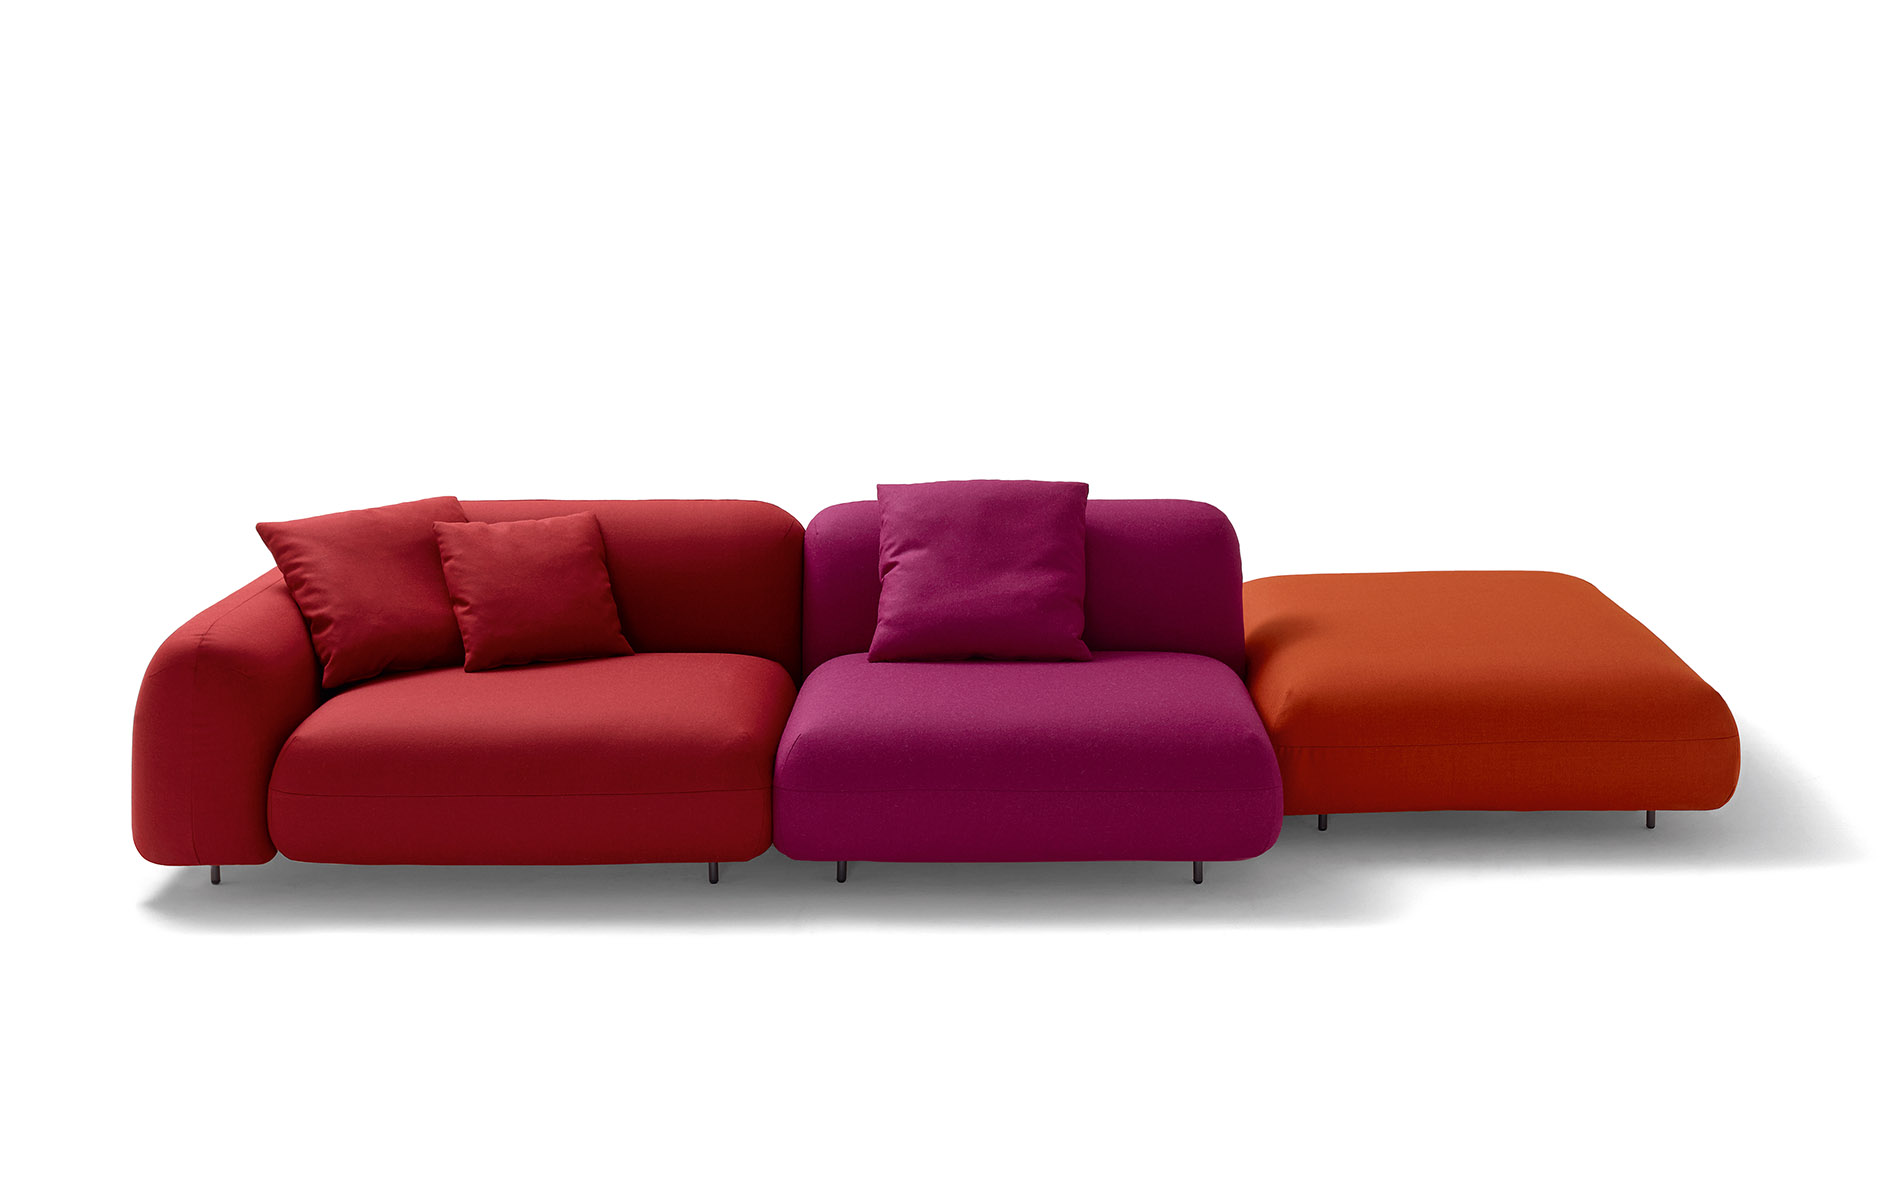  The Tokio sofa by Swedish designers Claesson Koivisto Rune for Arflex. Photo c/o Arflex. 